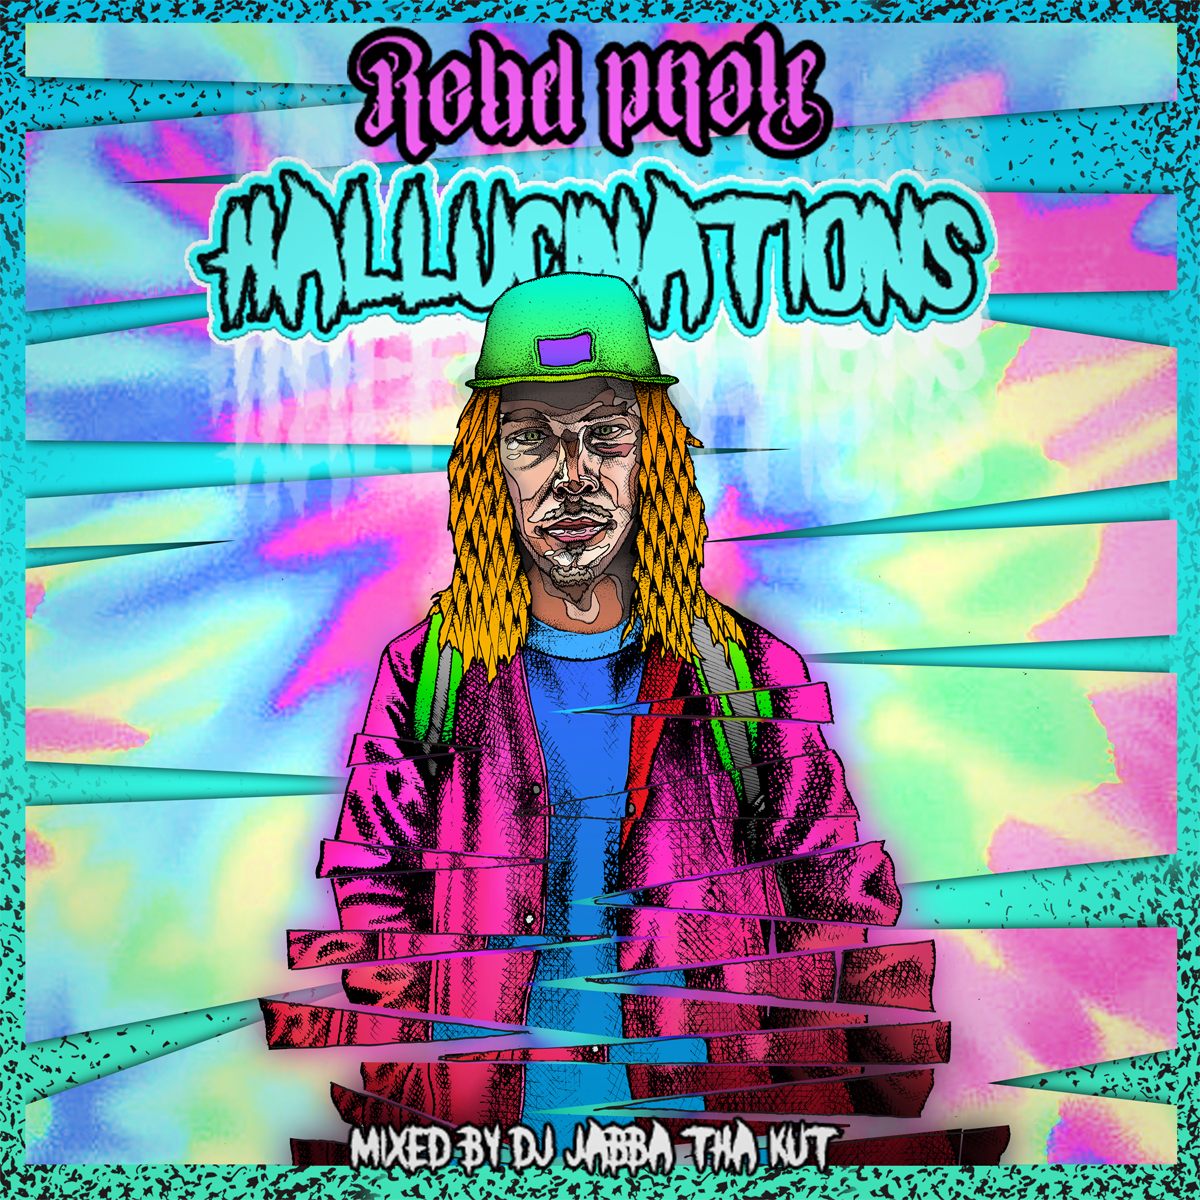 hallucinations trippy rebel prole mixtape country club records hip hop